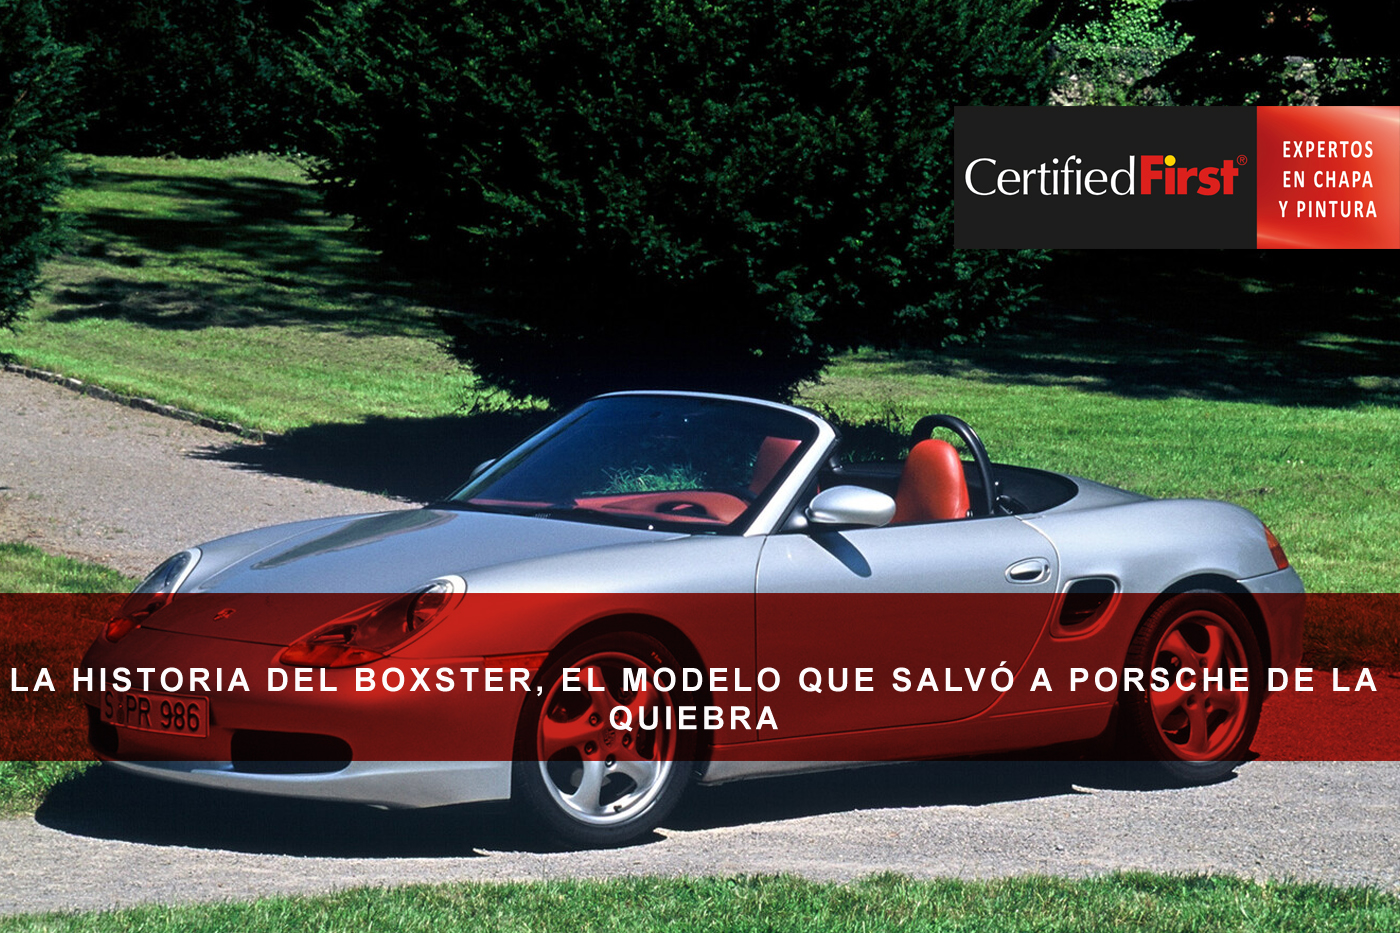 La historia del Boxster, el modelo que salvó a Porsche de la quiebra